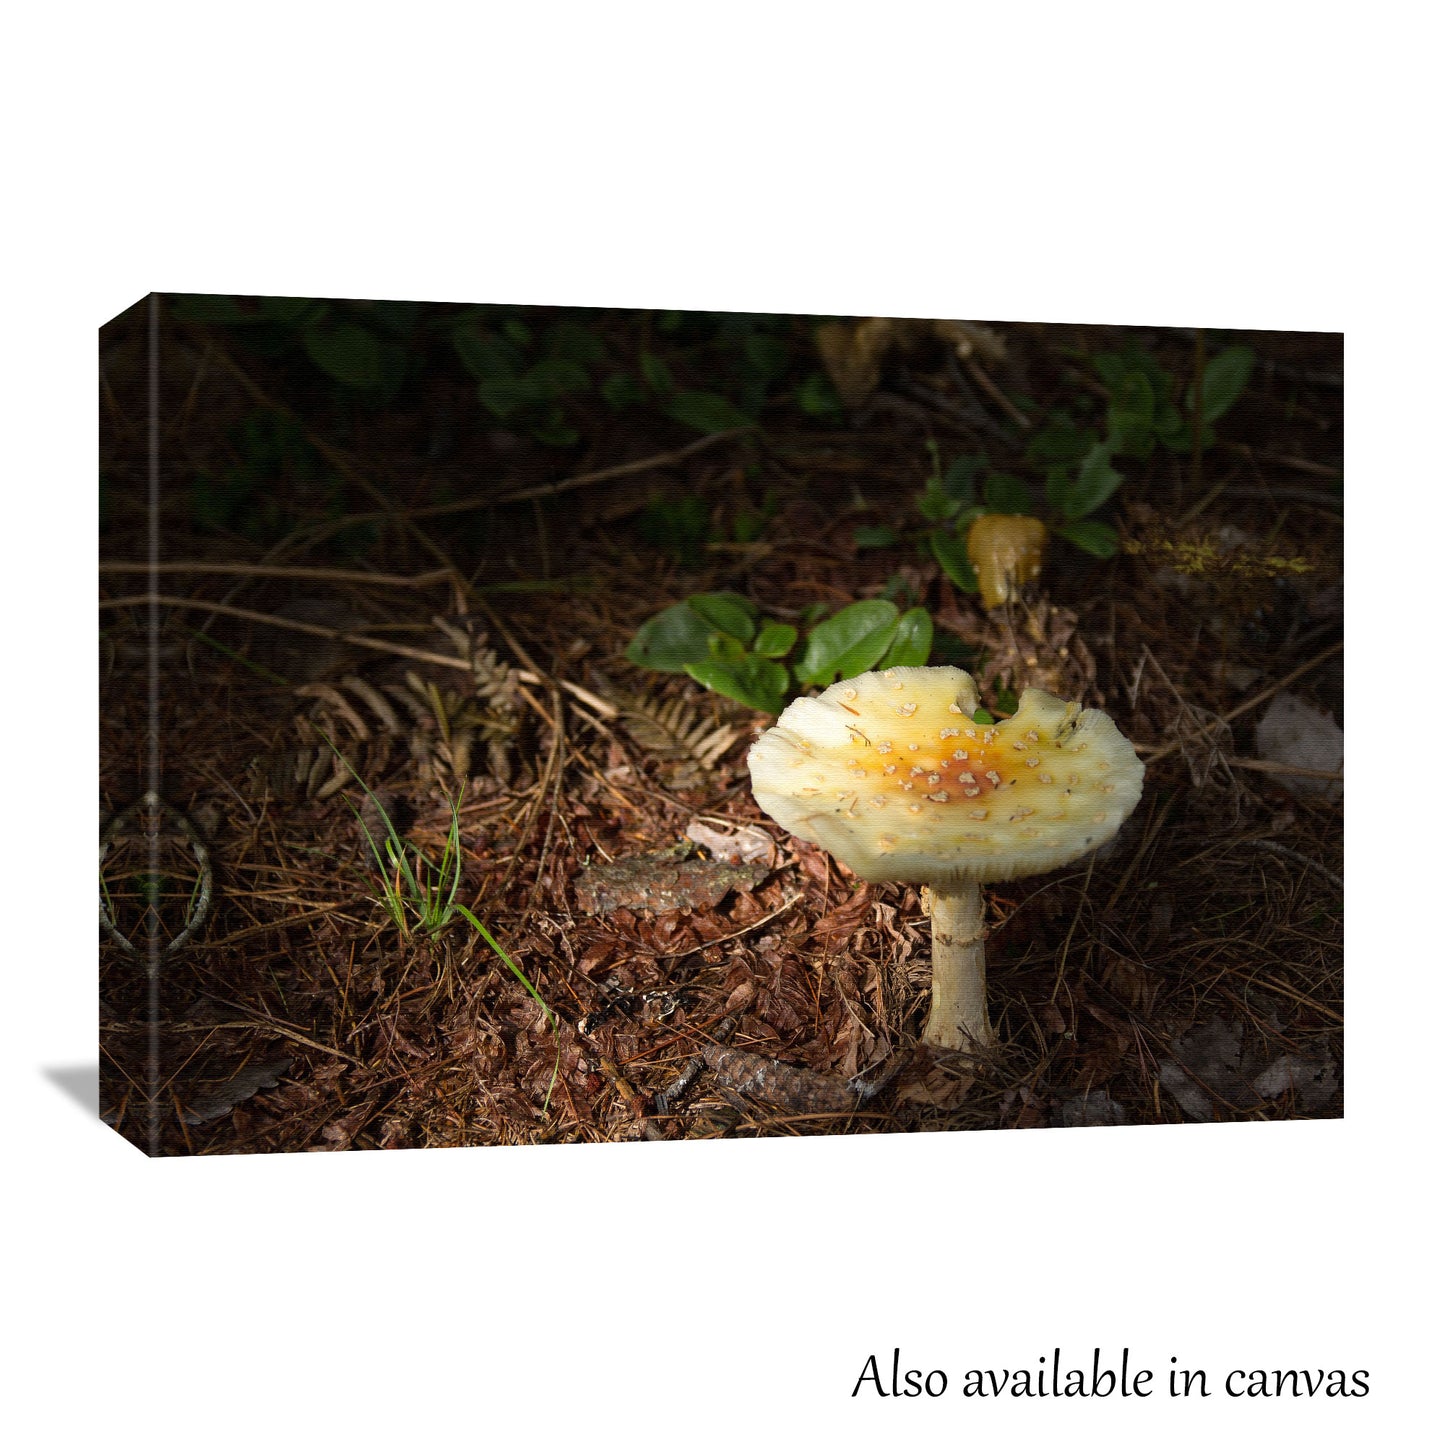 Solitary Mushroom Print